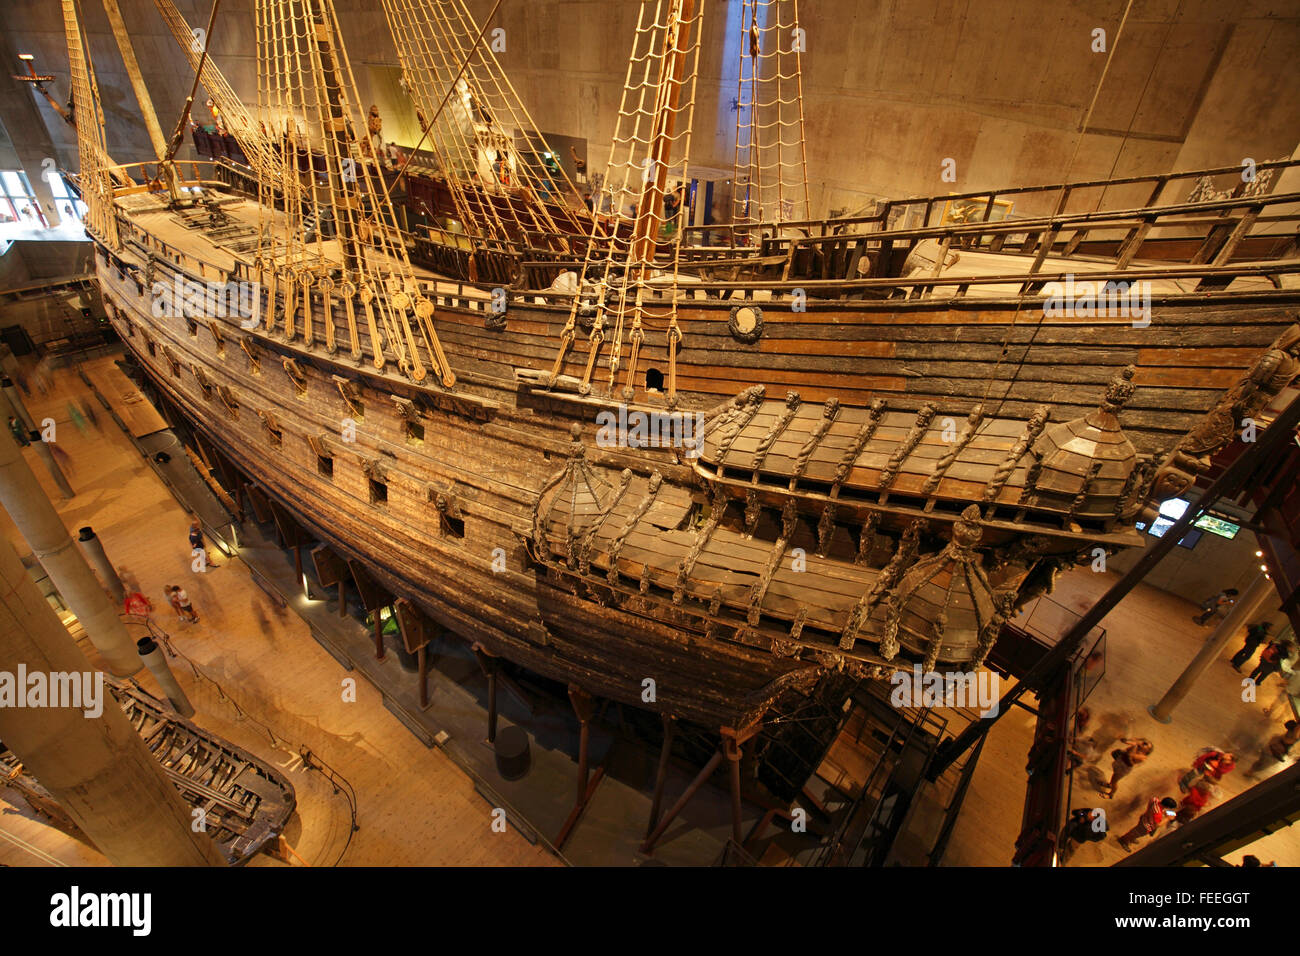 Vasa (ship) Museum in Stockholm, Sweden Stock Photo - Alamy